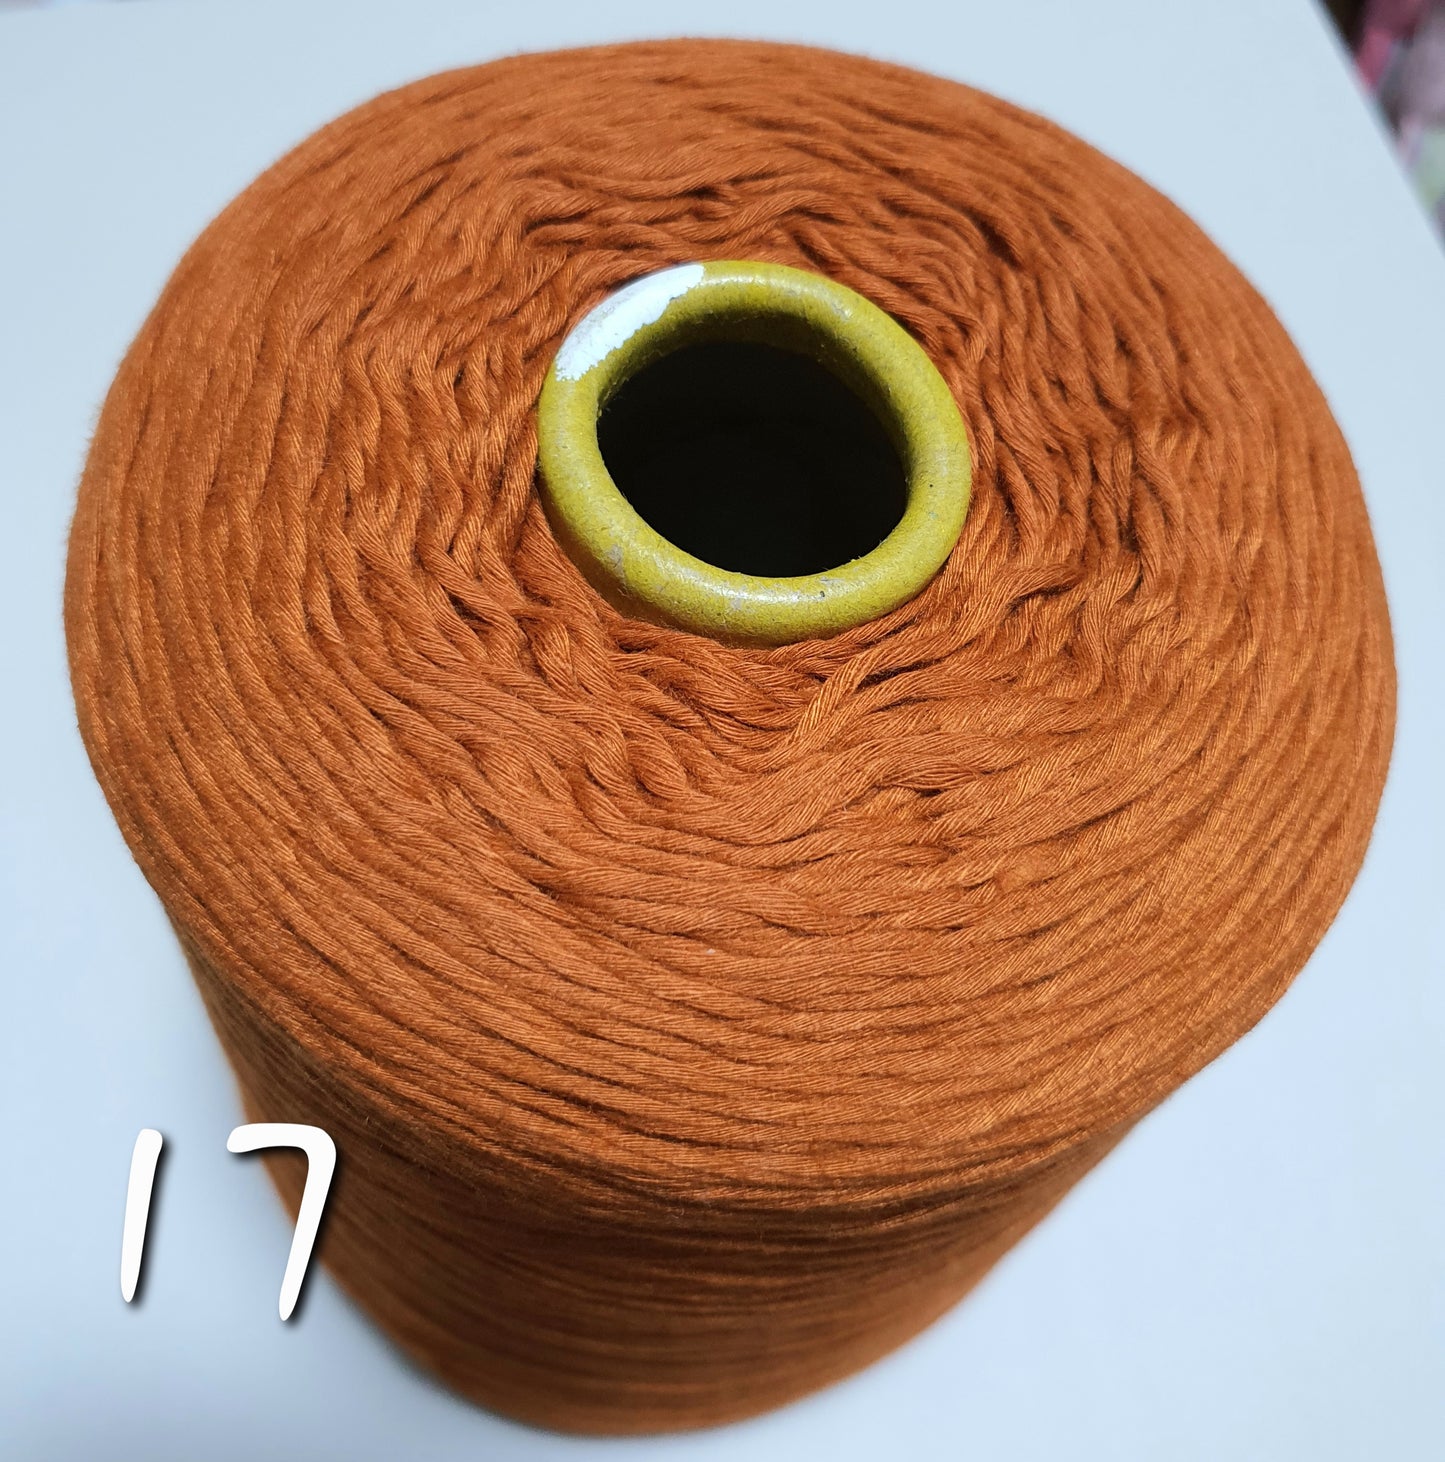 Combed Cotton yarn in cones